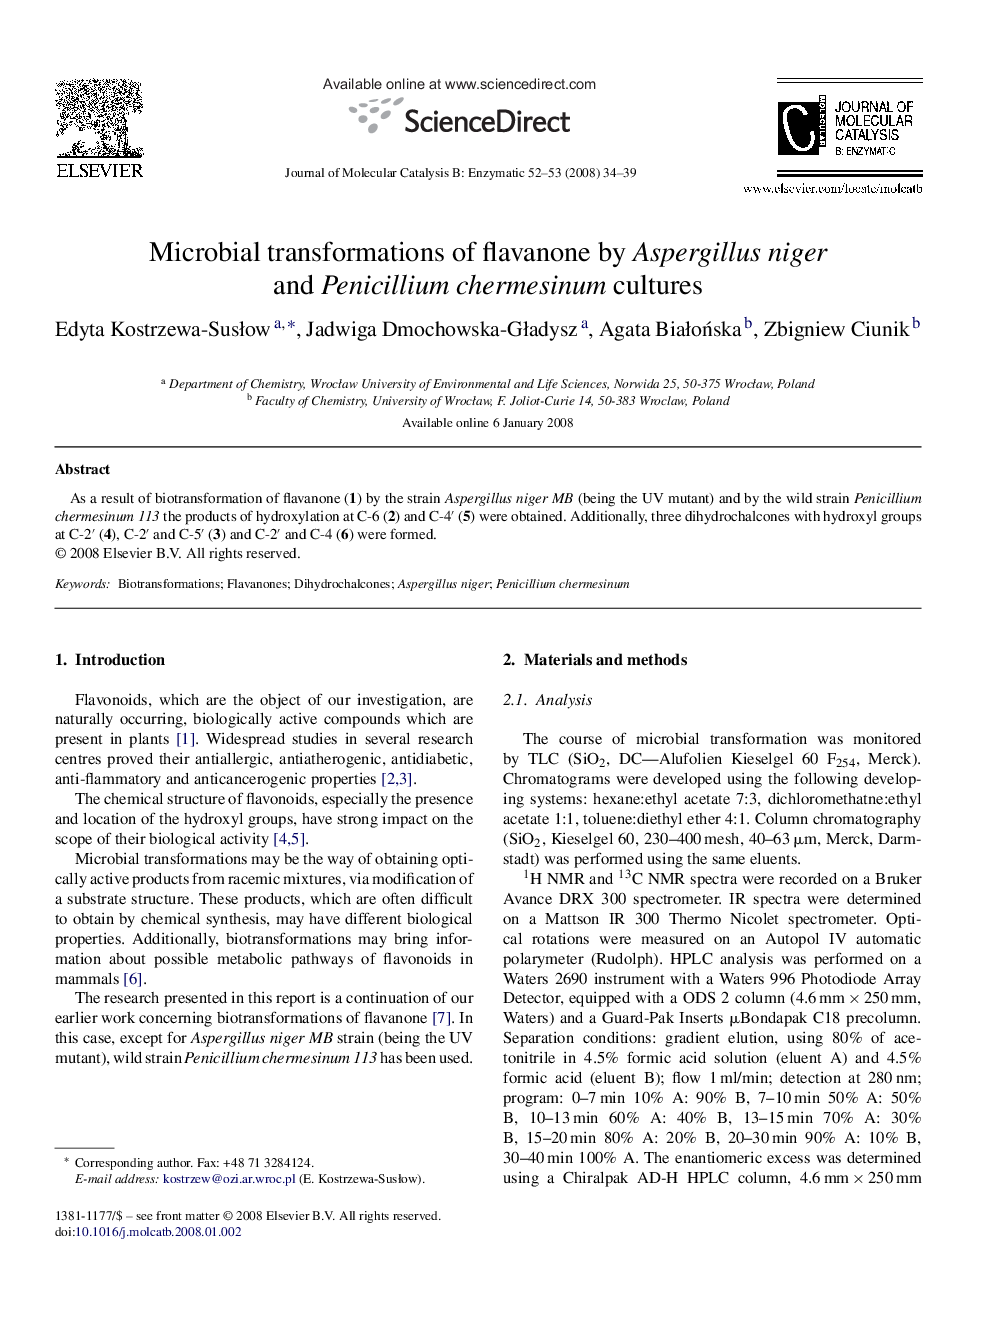 Microbial transformations of flavanone by Aspergillus niger and Penicillium chermesinum cultures